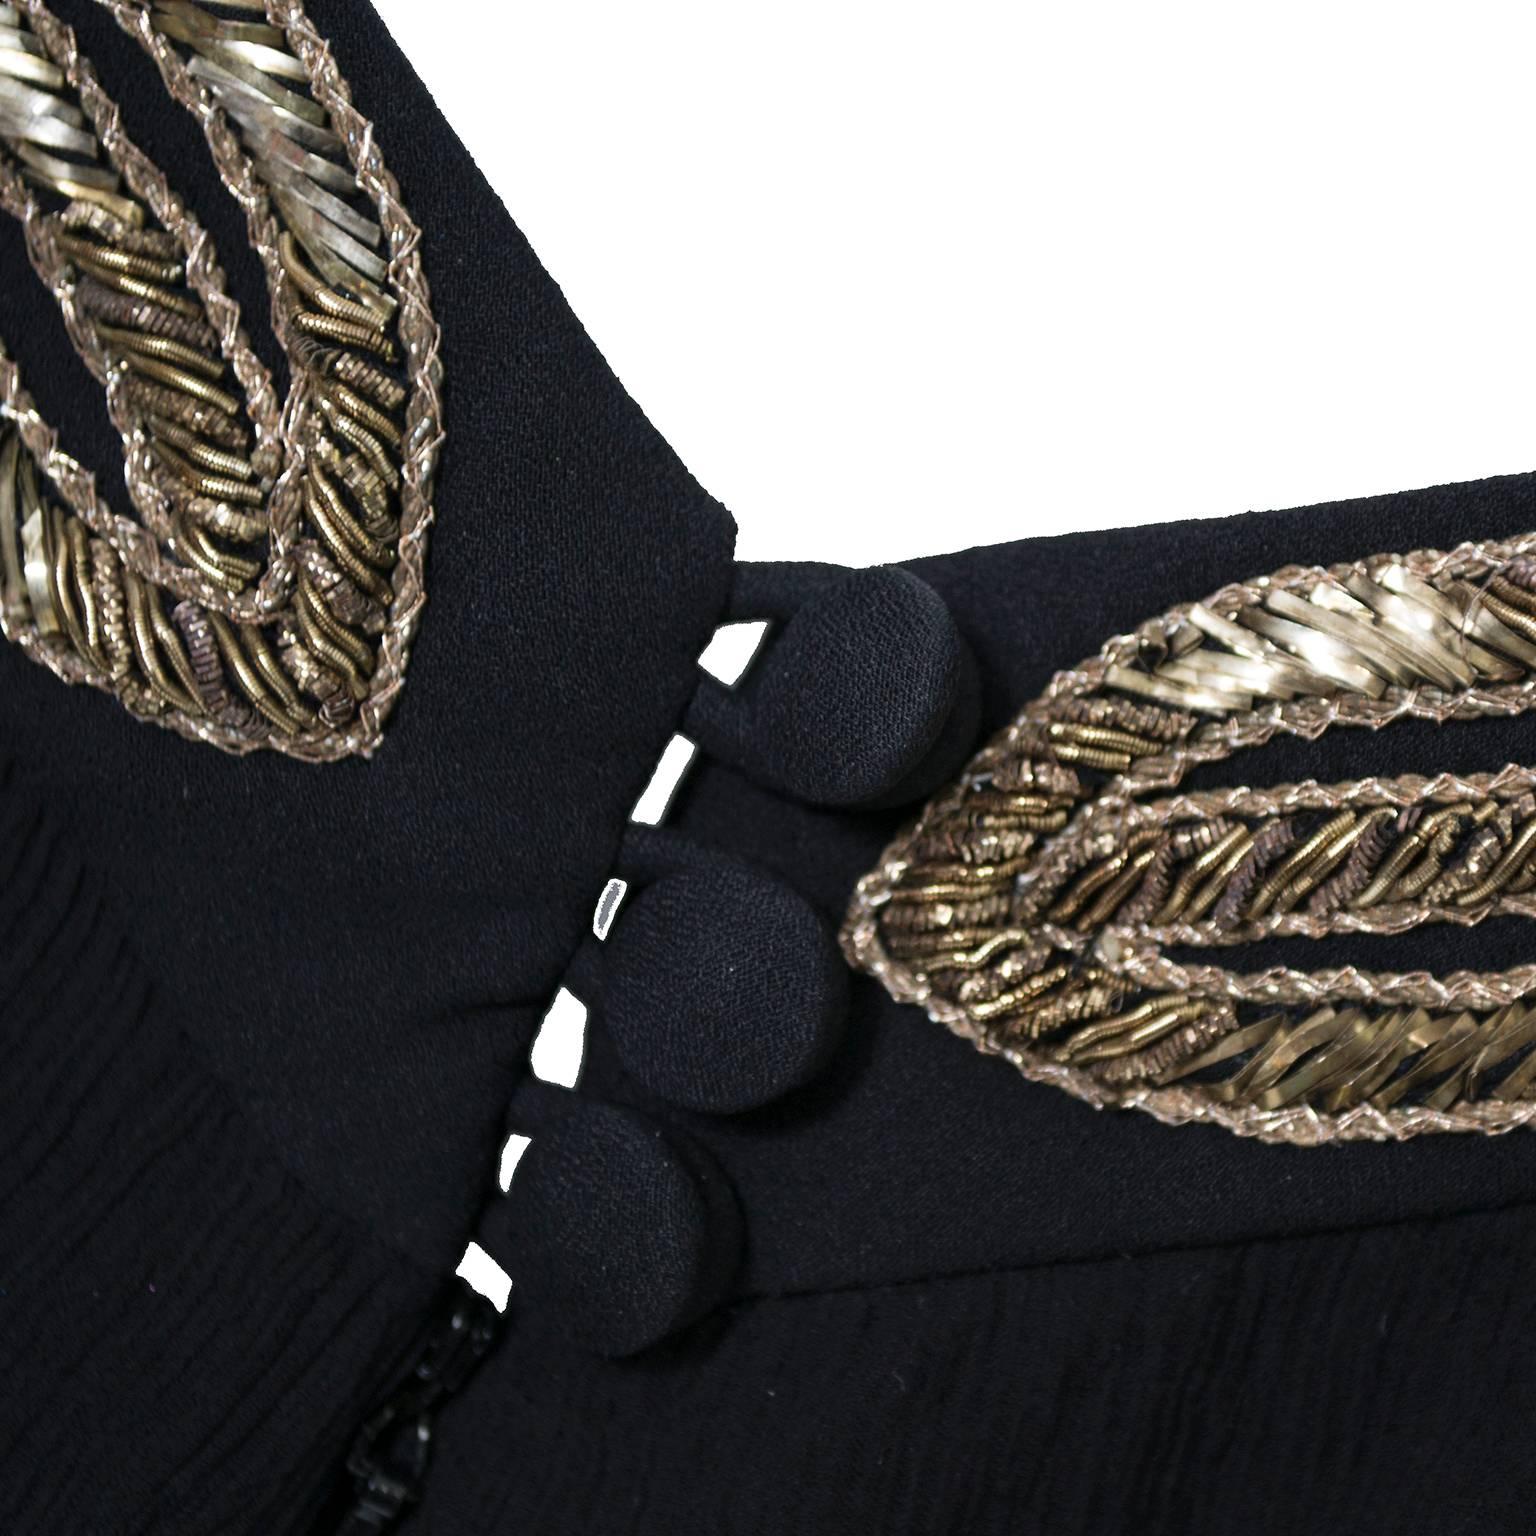 Black Temperley London Silk Chiffon Dress Metallic Embroidery Beading New Tags 8